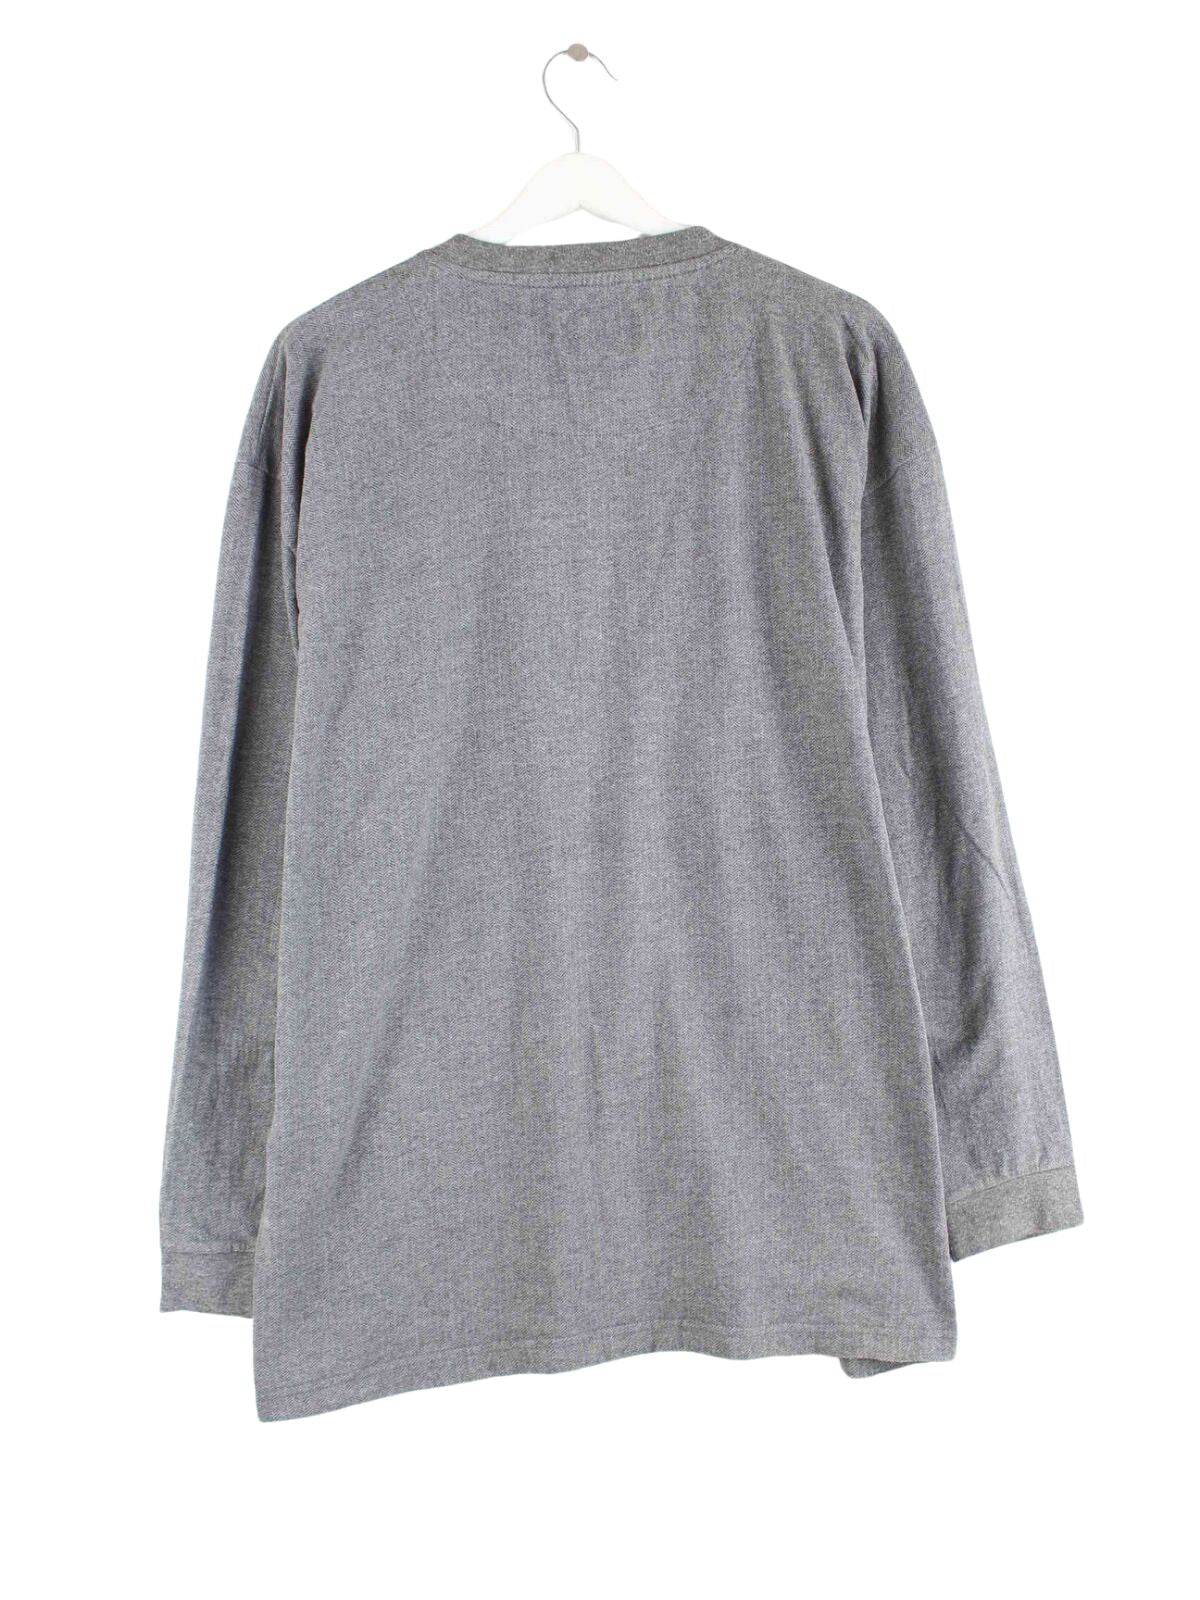 Nautica Sleepwear T-Shirt Grau  (back image)